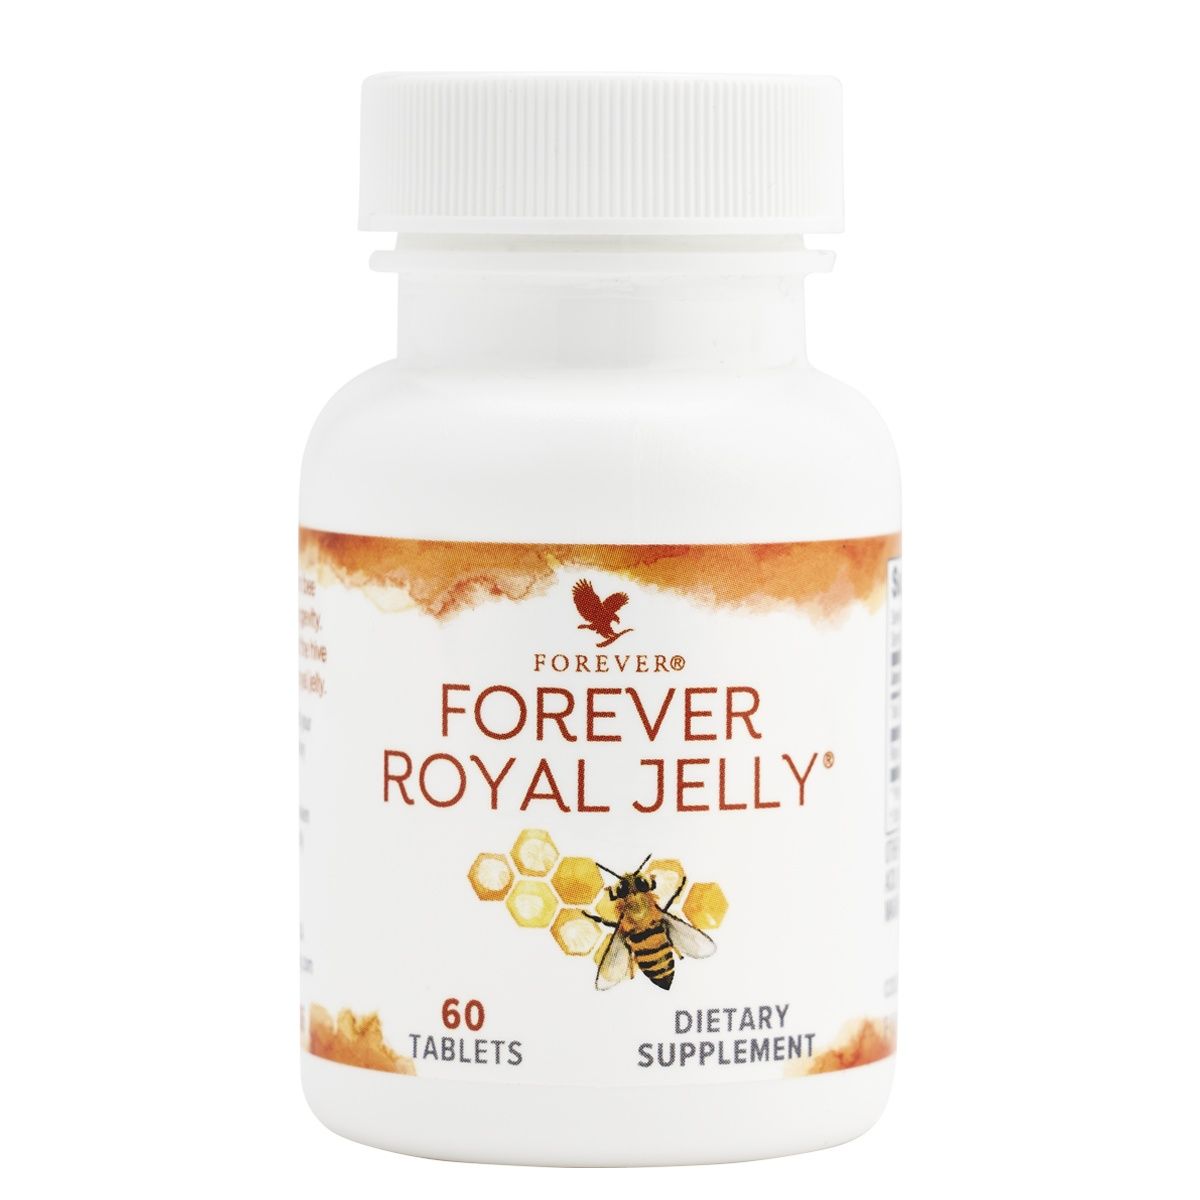 Royal Jelly capsule